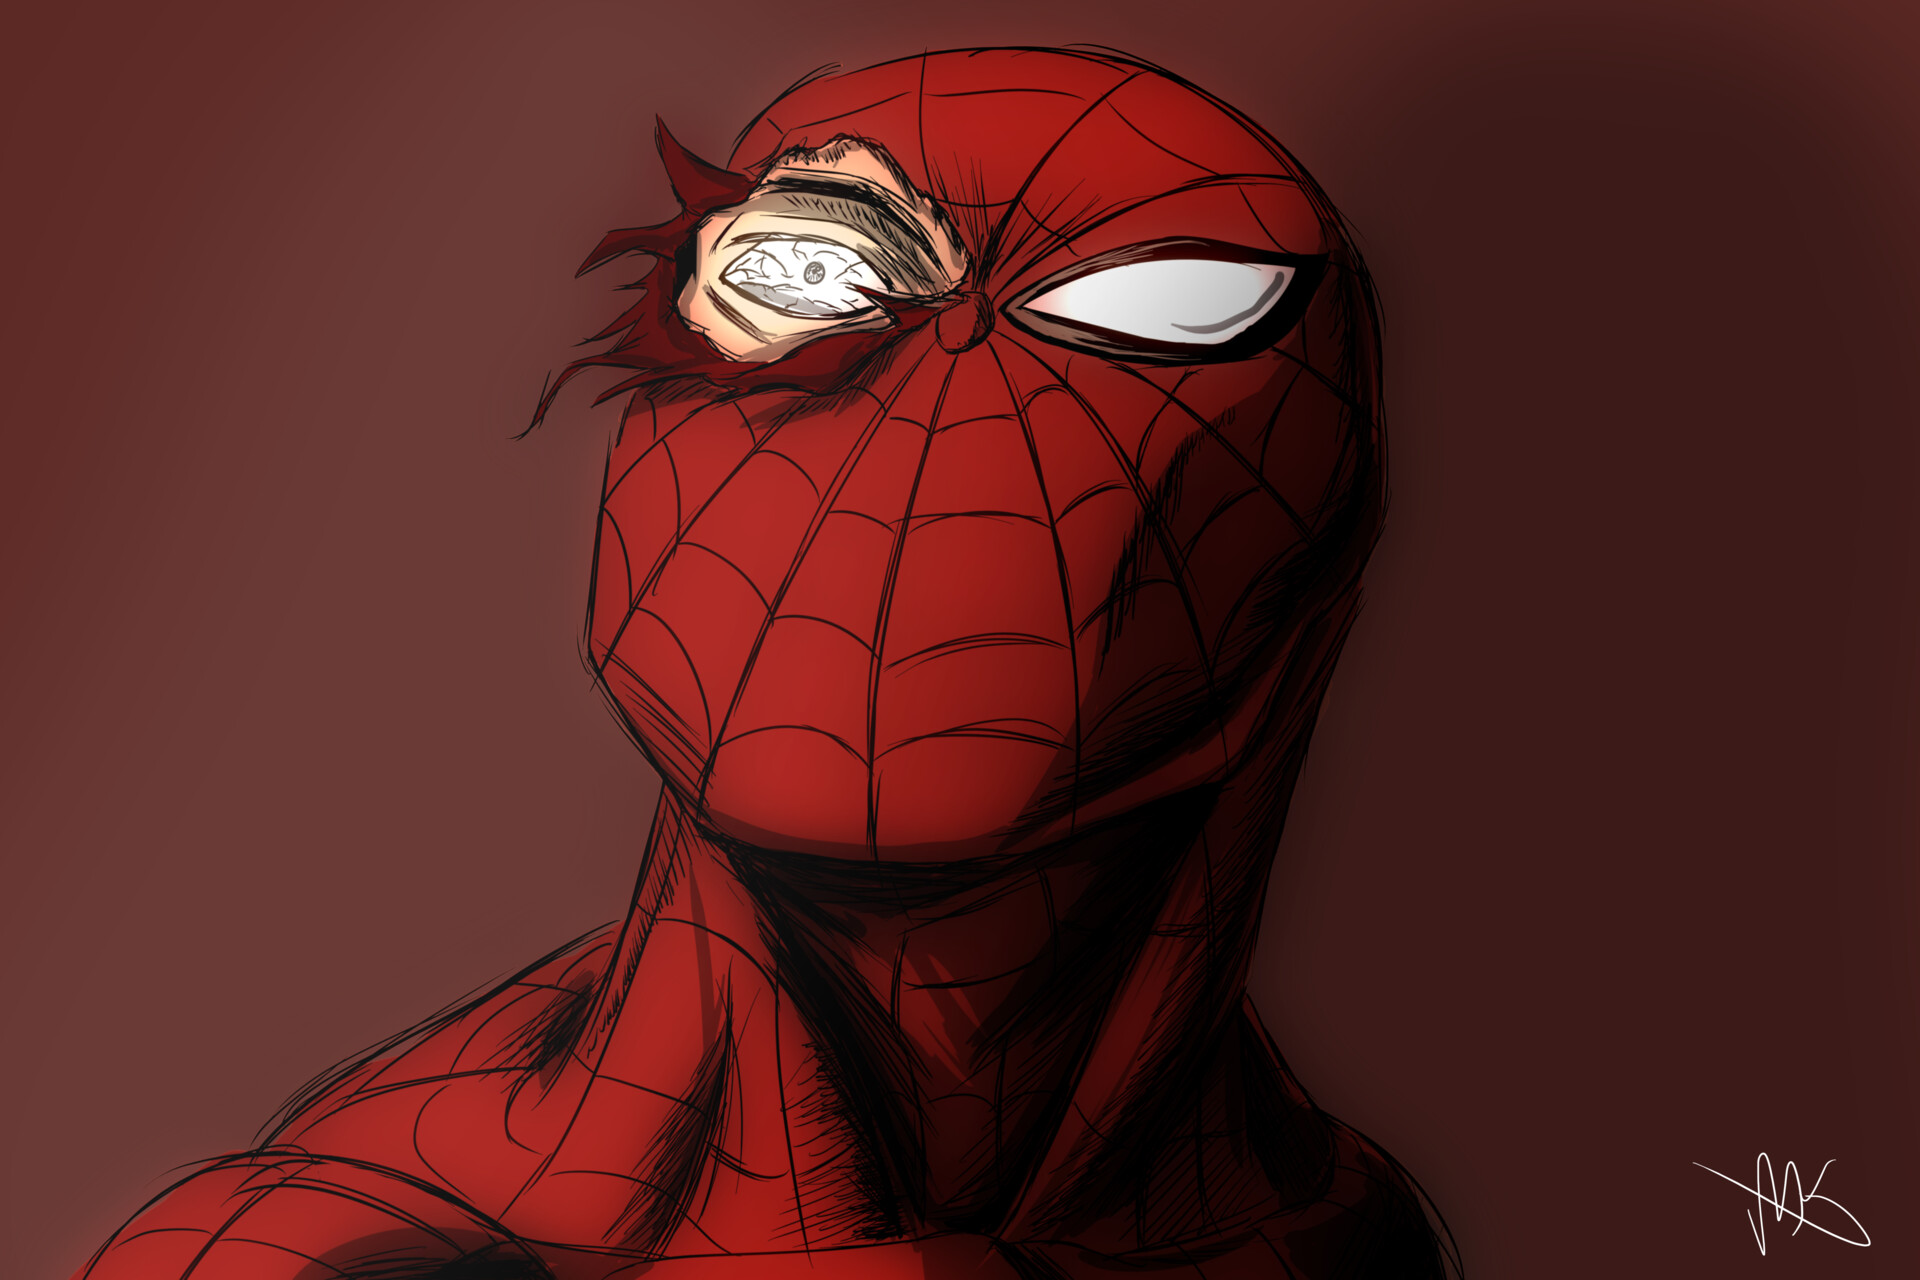 Holland on Twitter So I had the urge the draw Akaashi as spiderman art  digitalart FANART anime MarvelStudios SpiderMan PETERPARKER  akaashikeiji Haikyuu marvel crossover httpstcoAvQ4ma1EIR  Twitter